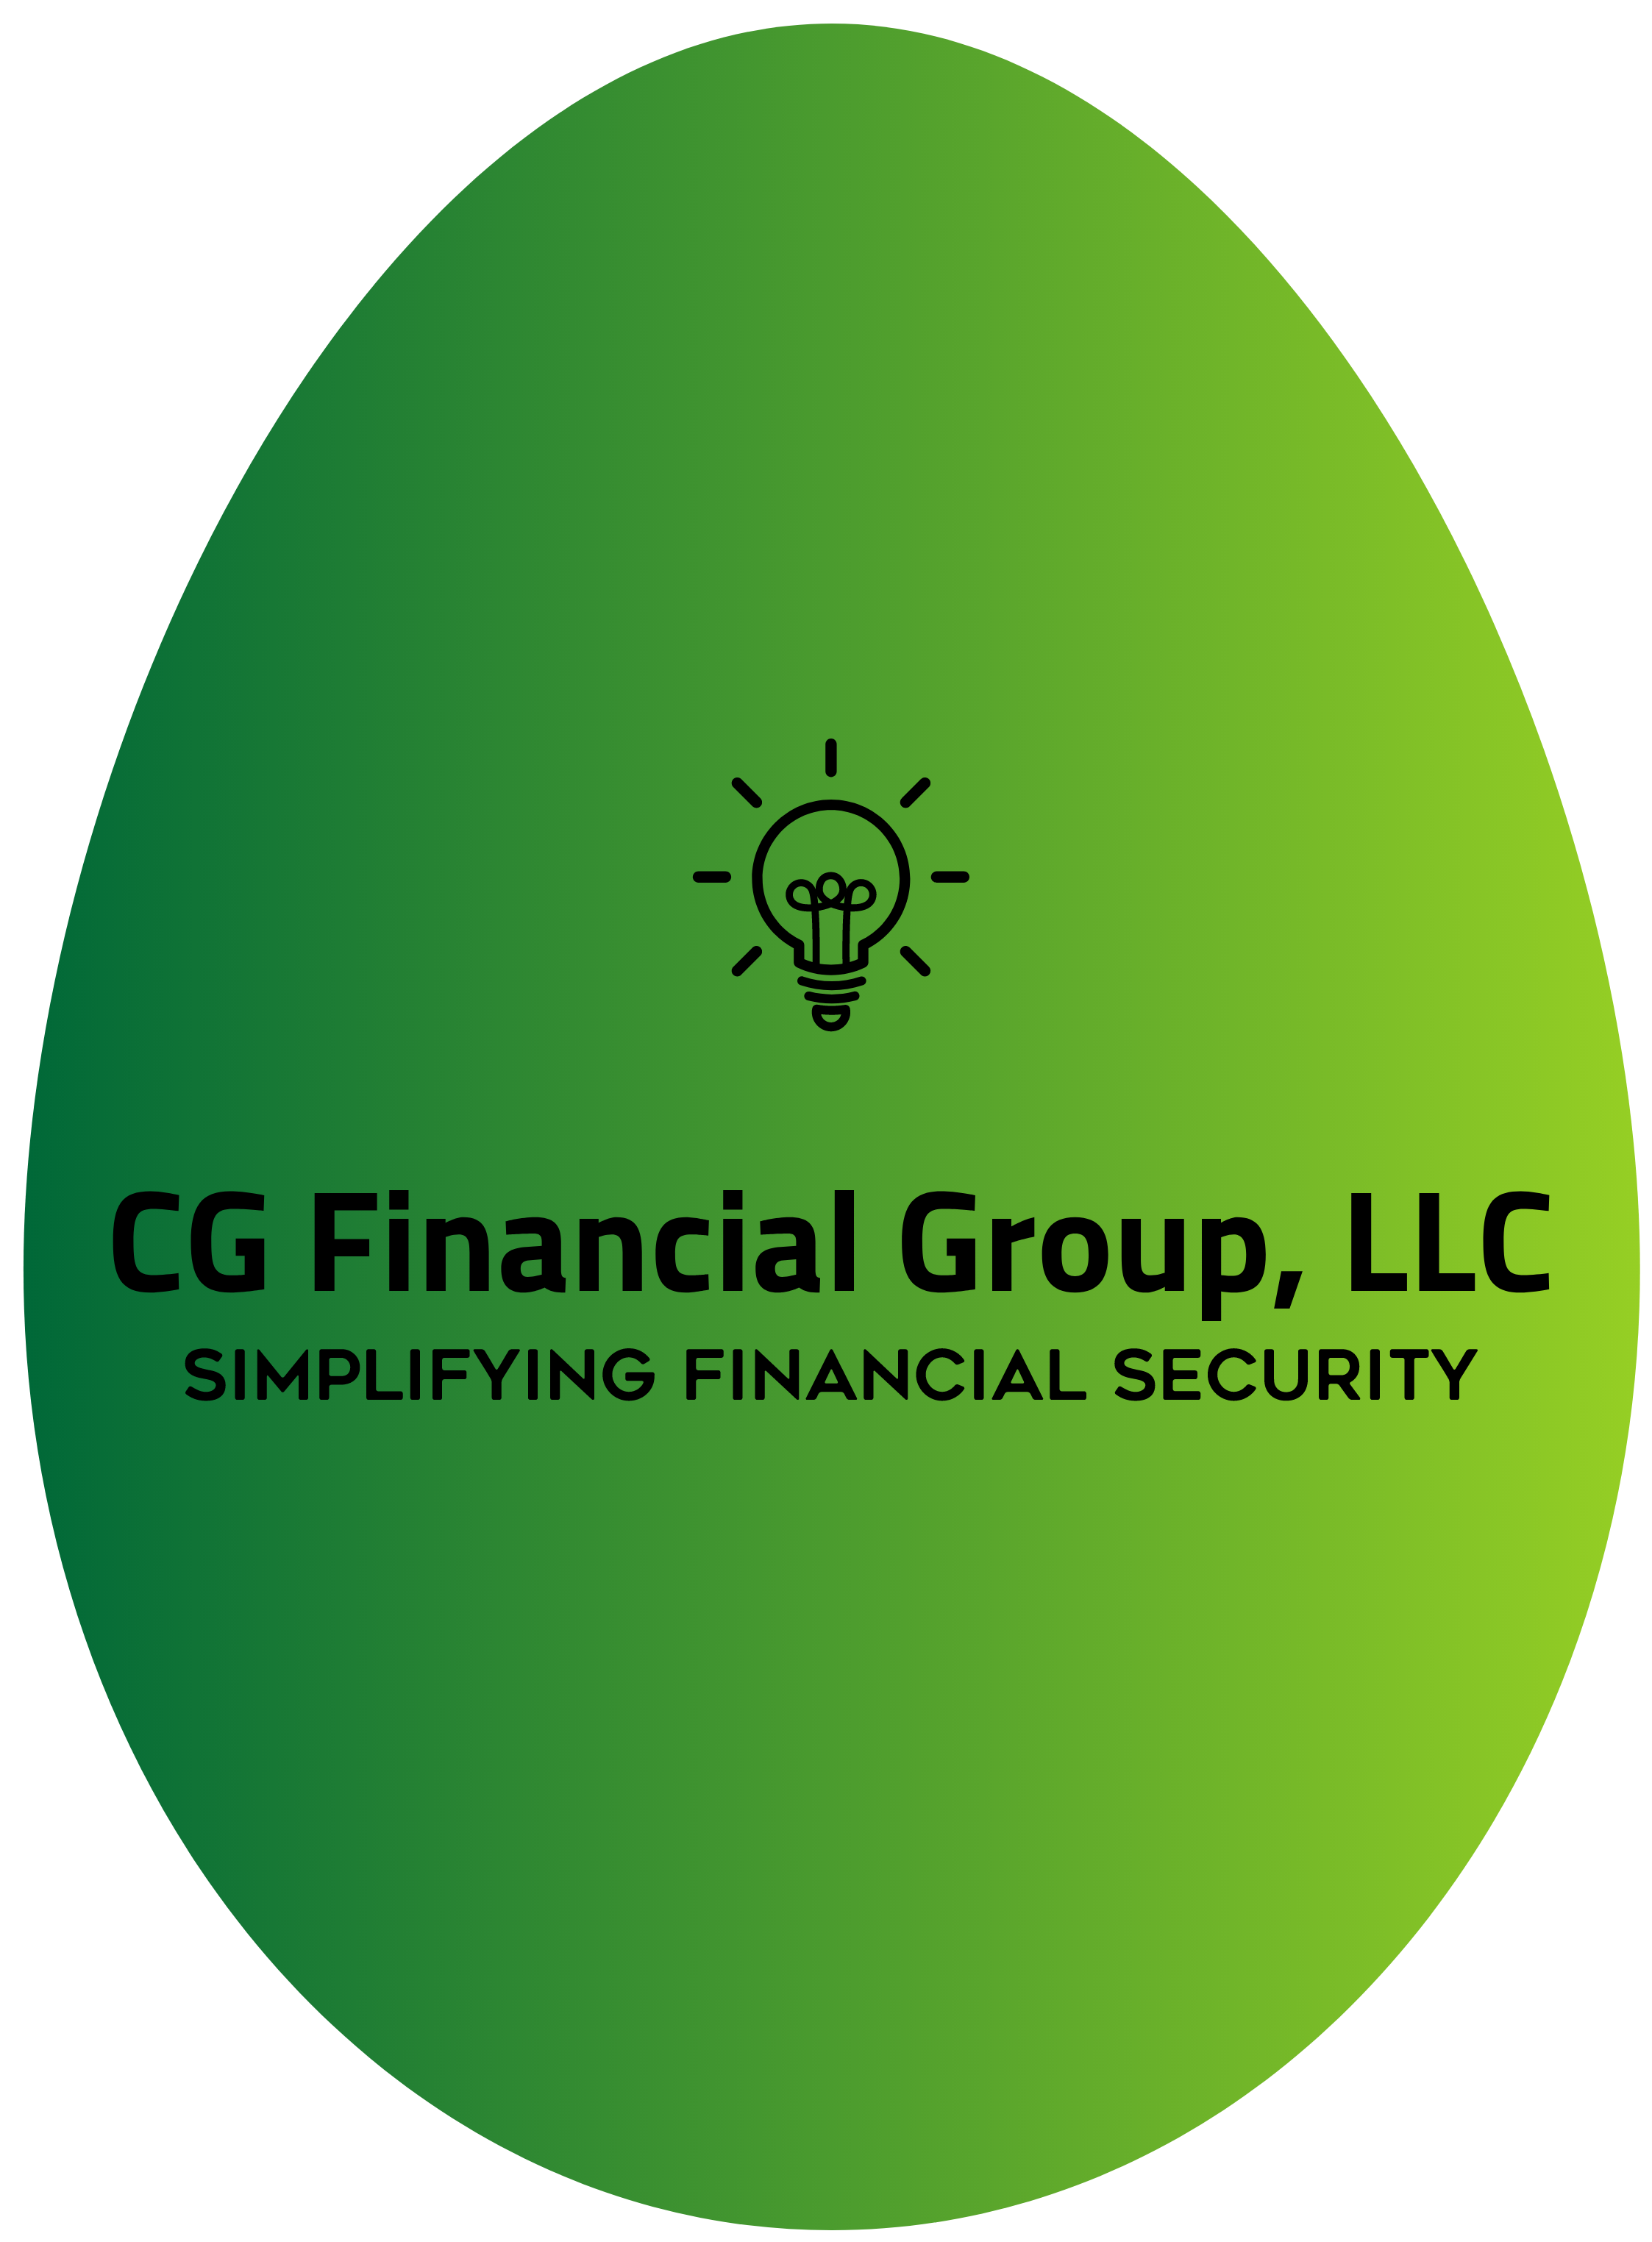 CG Financial Group, LLC